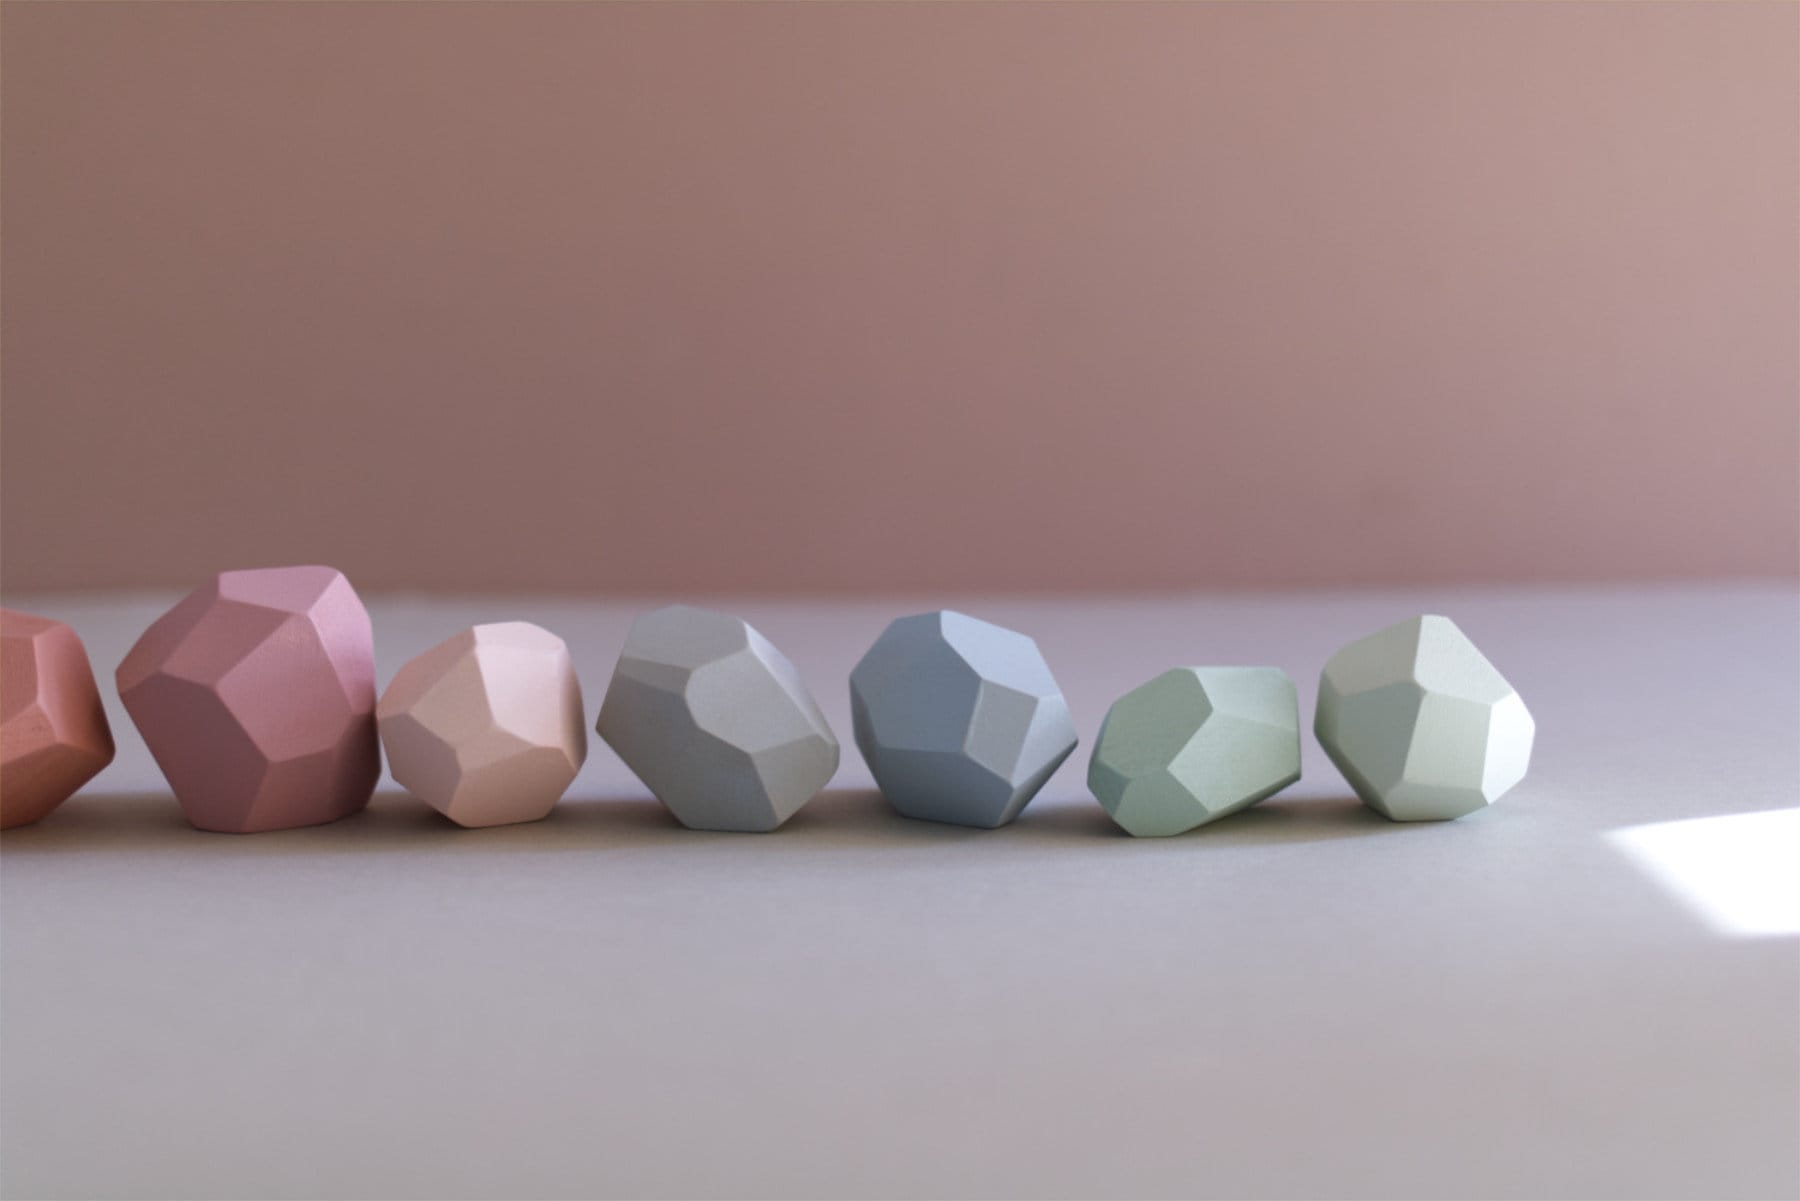 Montessori Balancing Stones - Set of 10